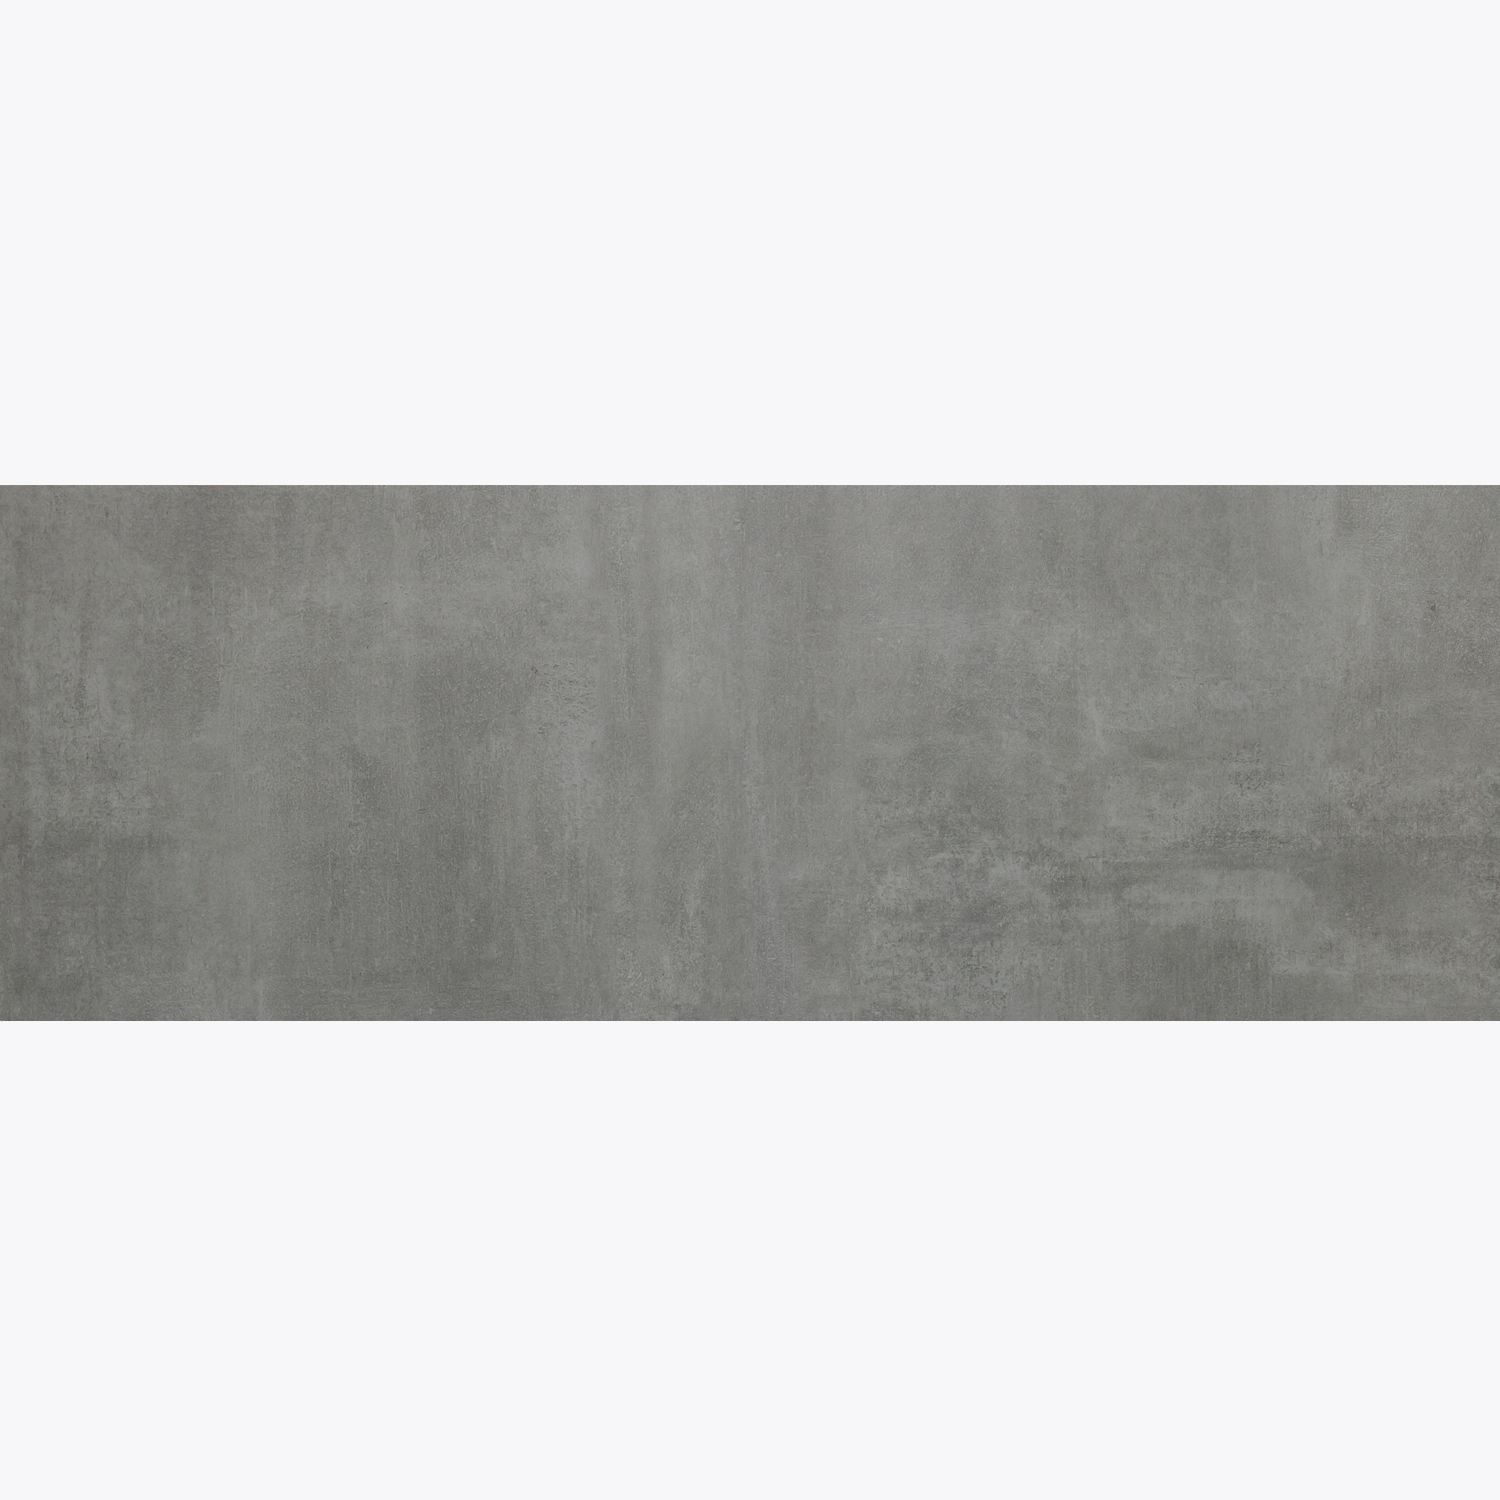 Pavimento New York gres porcellanato 60x120cm grigio opaco